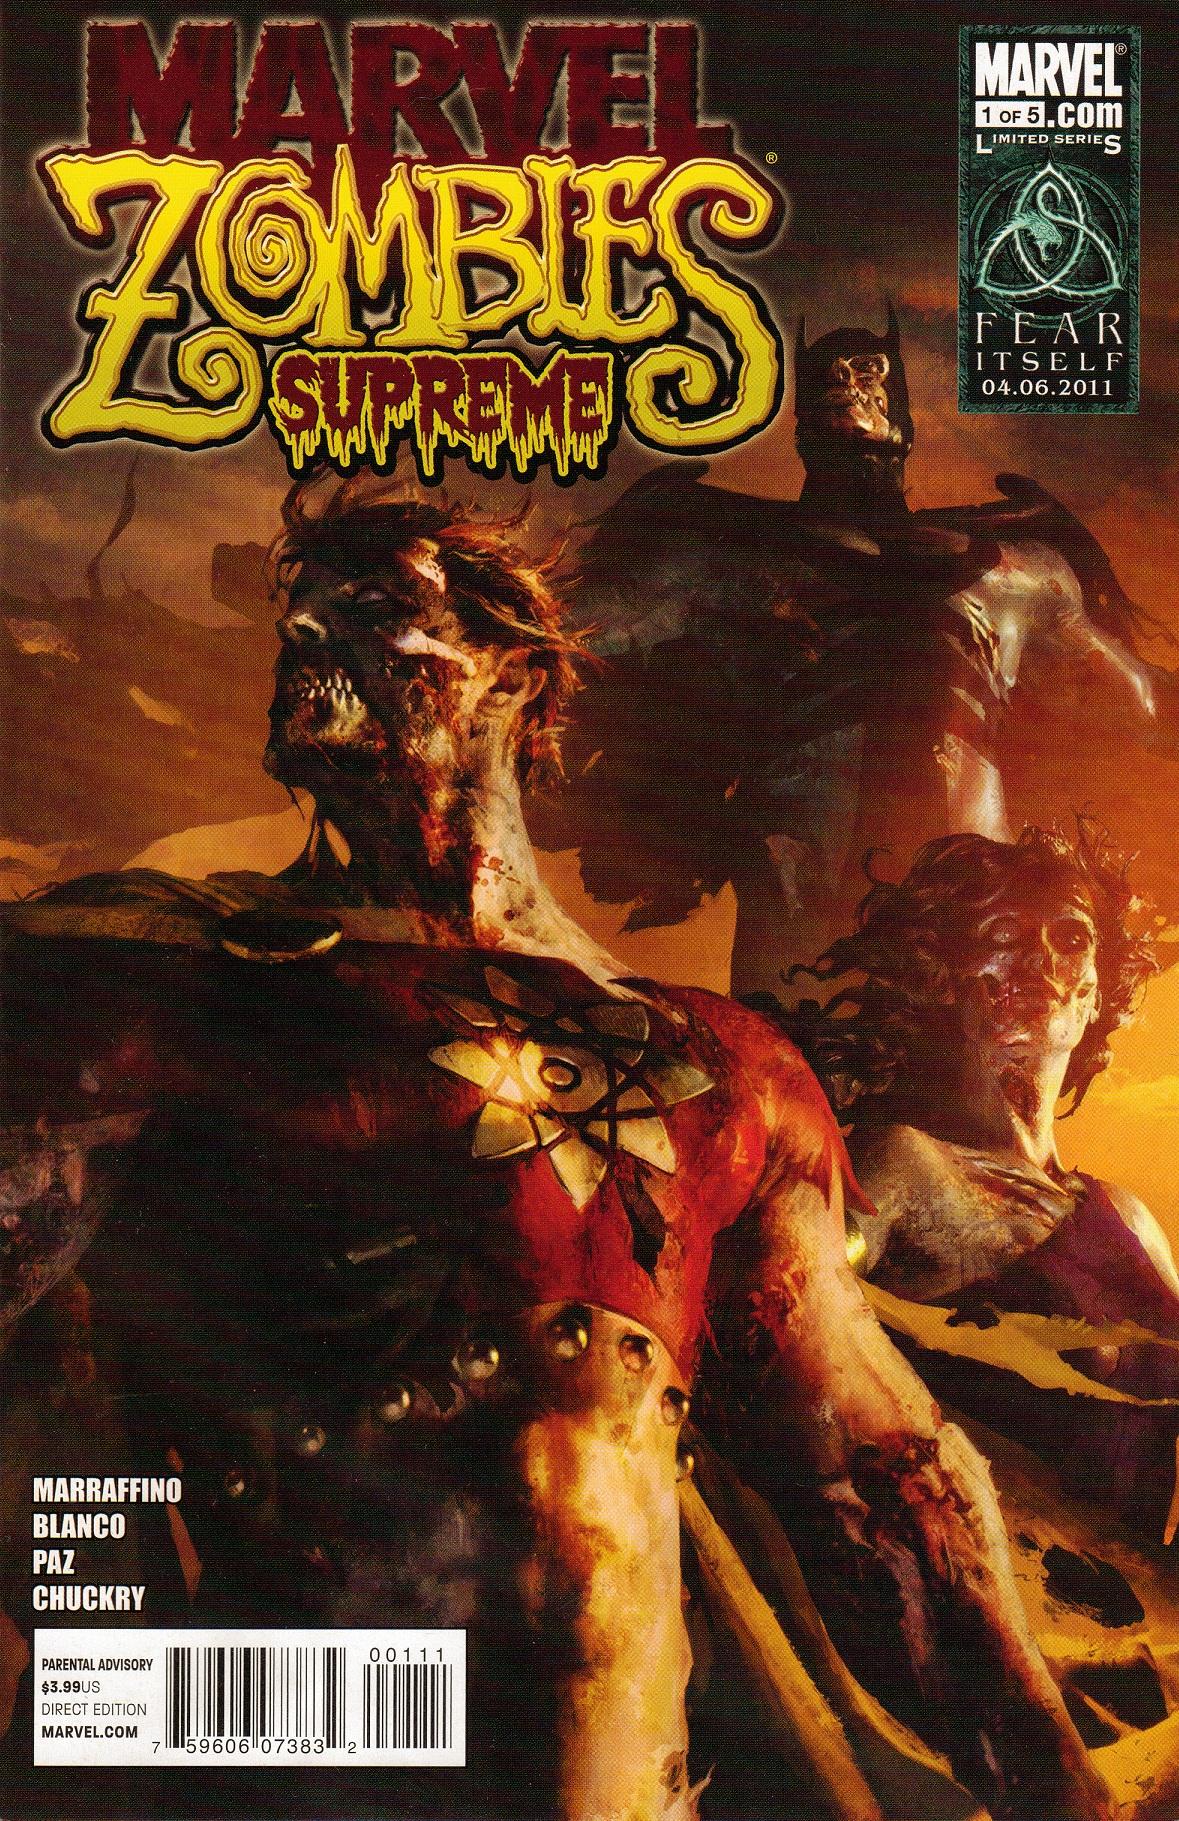 Marvel Zombies Supreme Vol. 1 #1